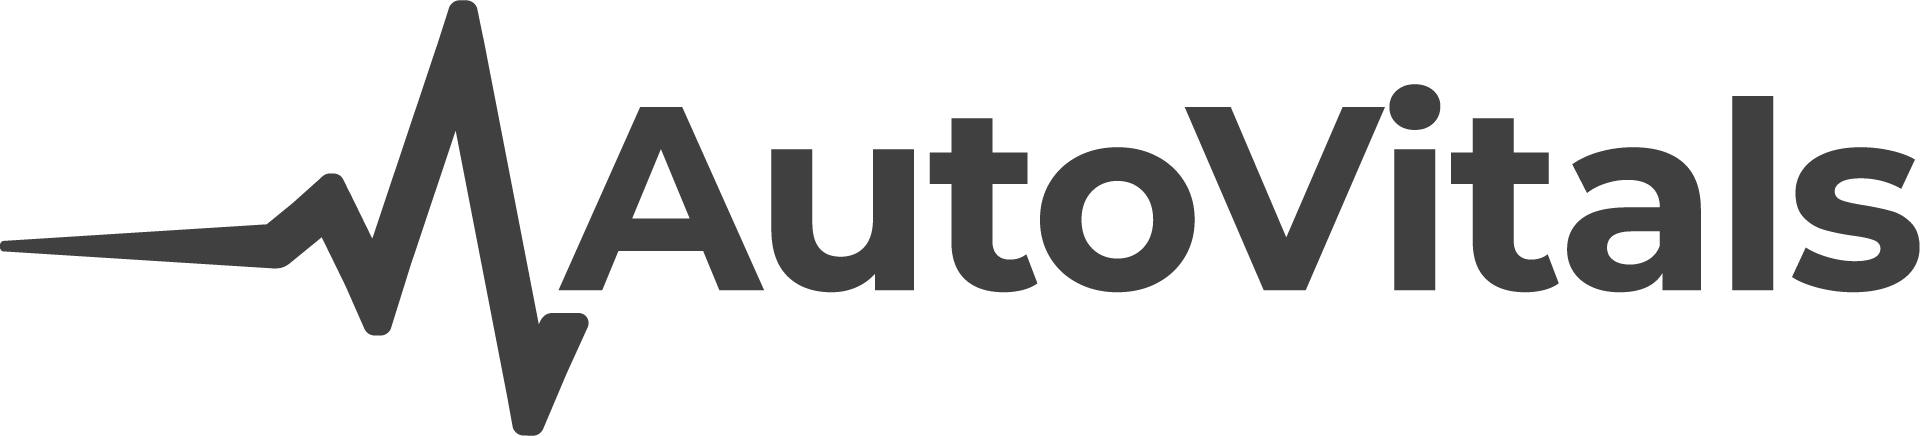 Press Release: Automotive Service Councils of California Announces Corporate Partnership with AutoVitals